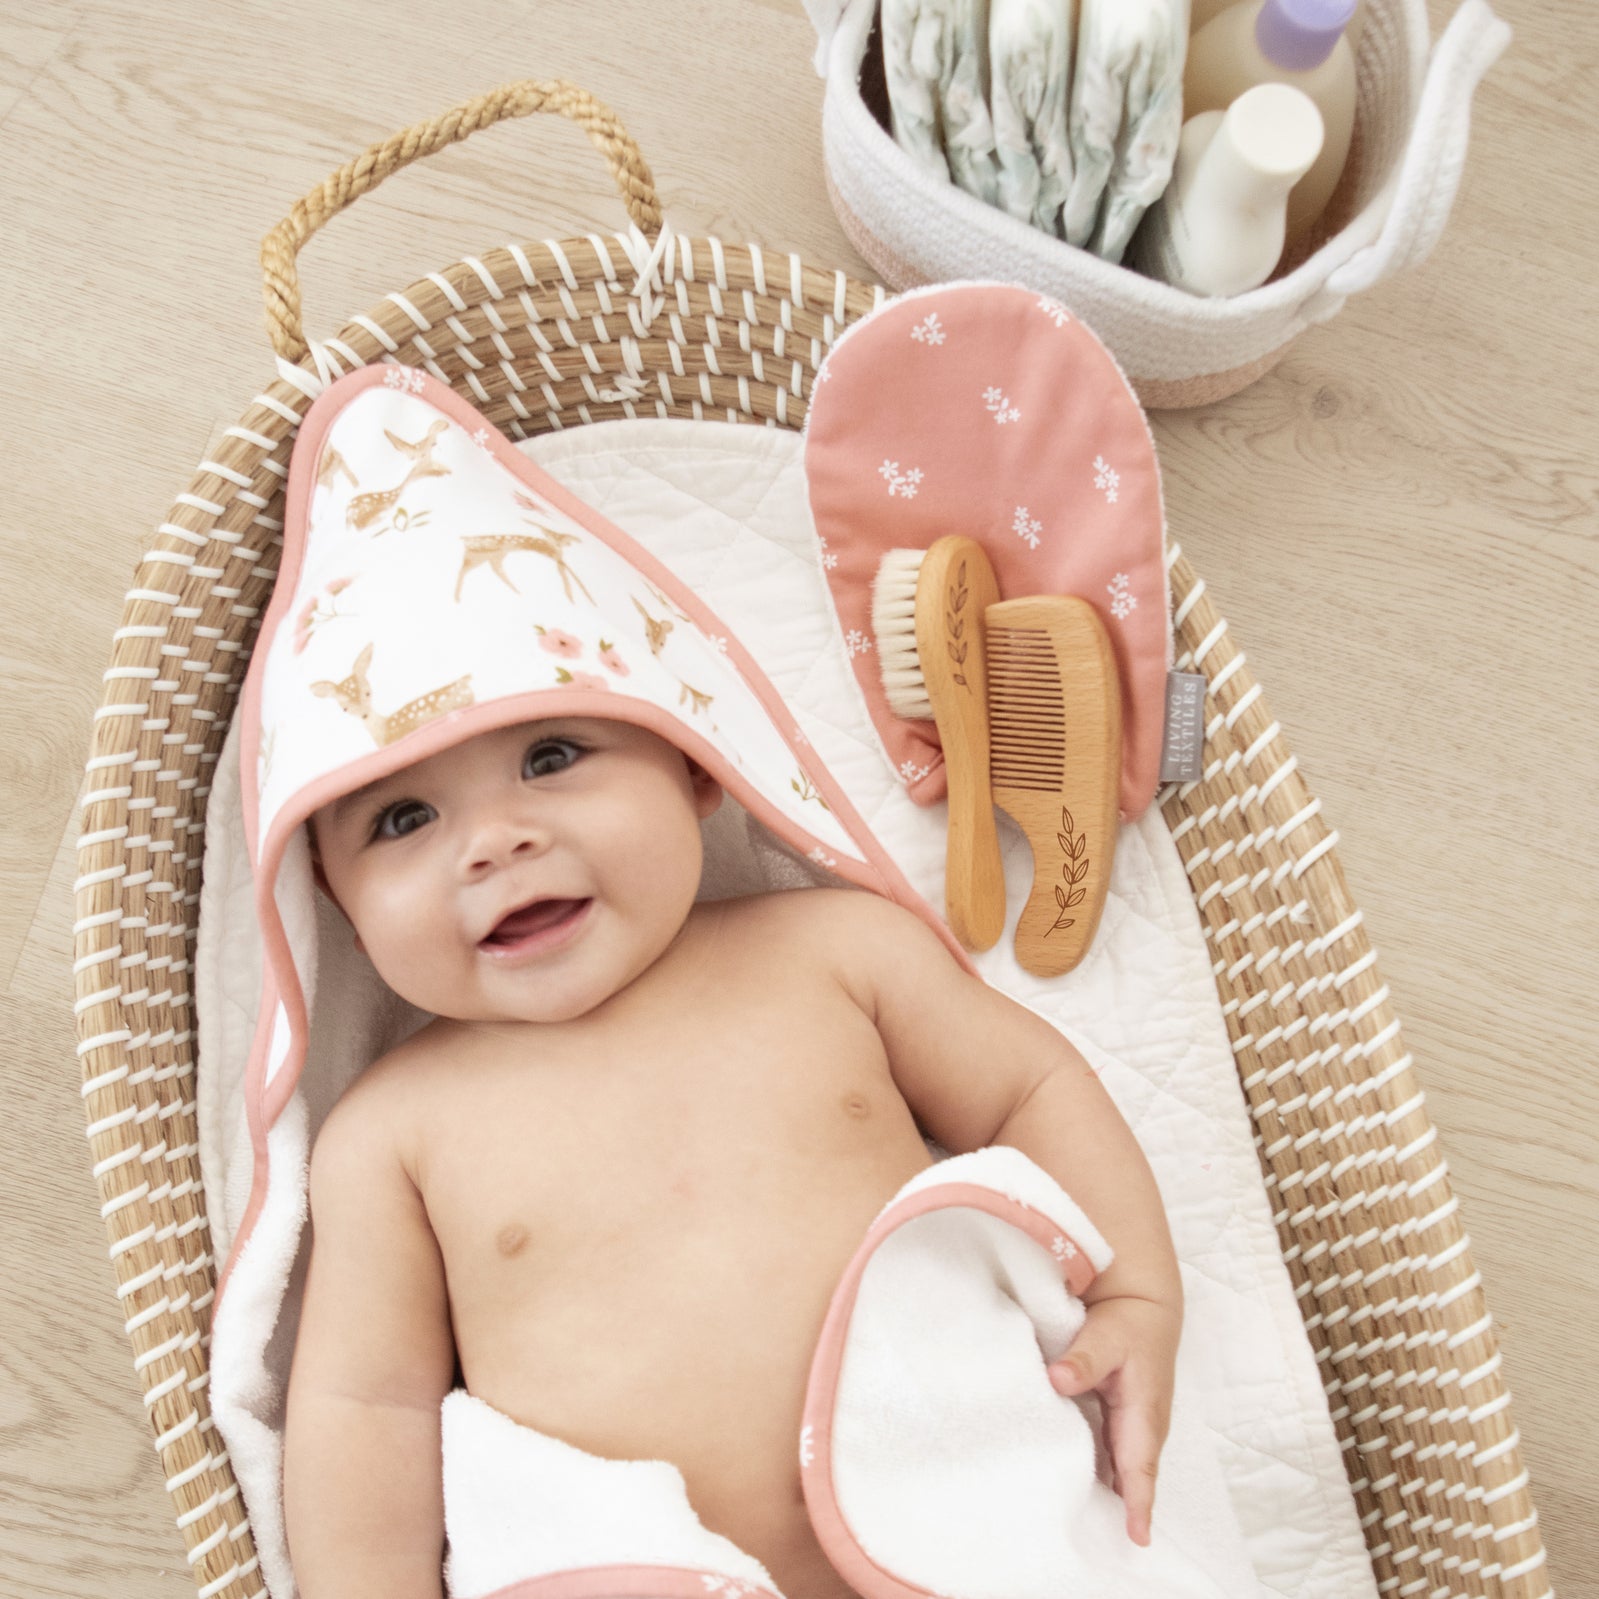 Living Textiles 4pc Baby Bath Gift Set -Sophia's Garden - Tiny Tots Baby Store 